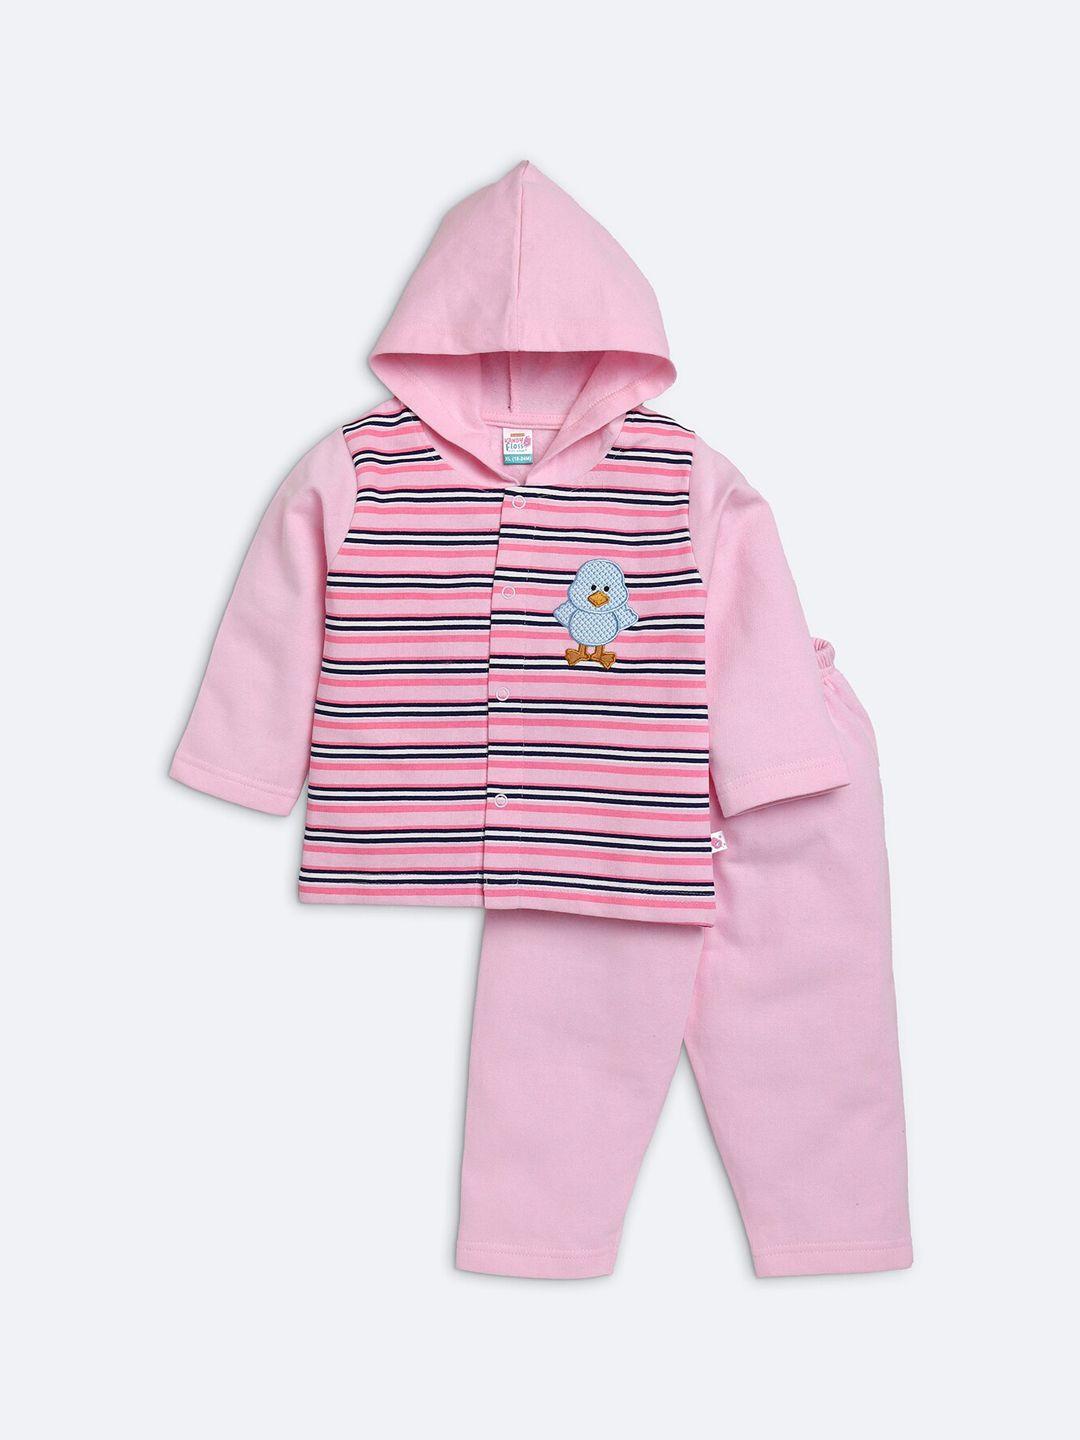 amul-kandyfloss-unisex-kids-pink-&-white-printed-pure-cotton-hoodie-clothing-set-set